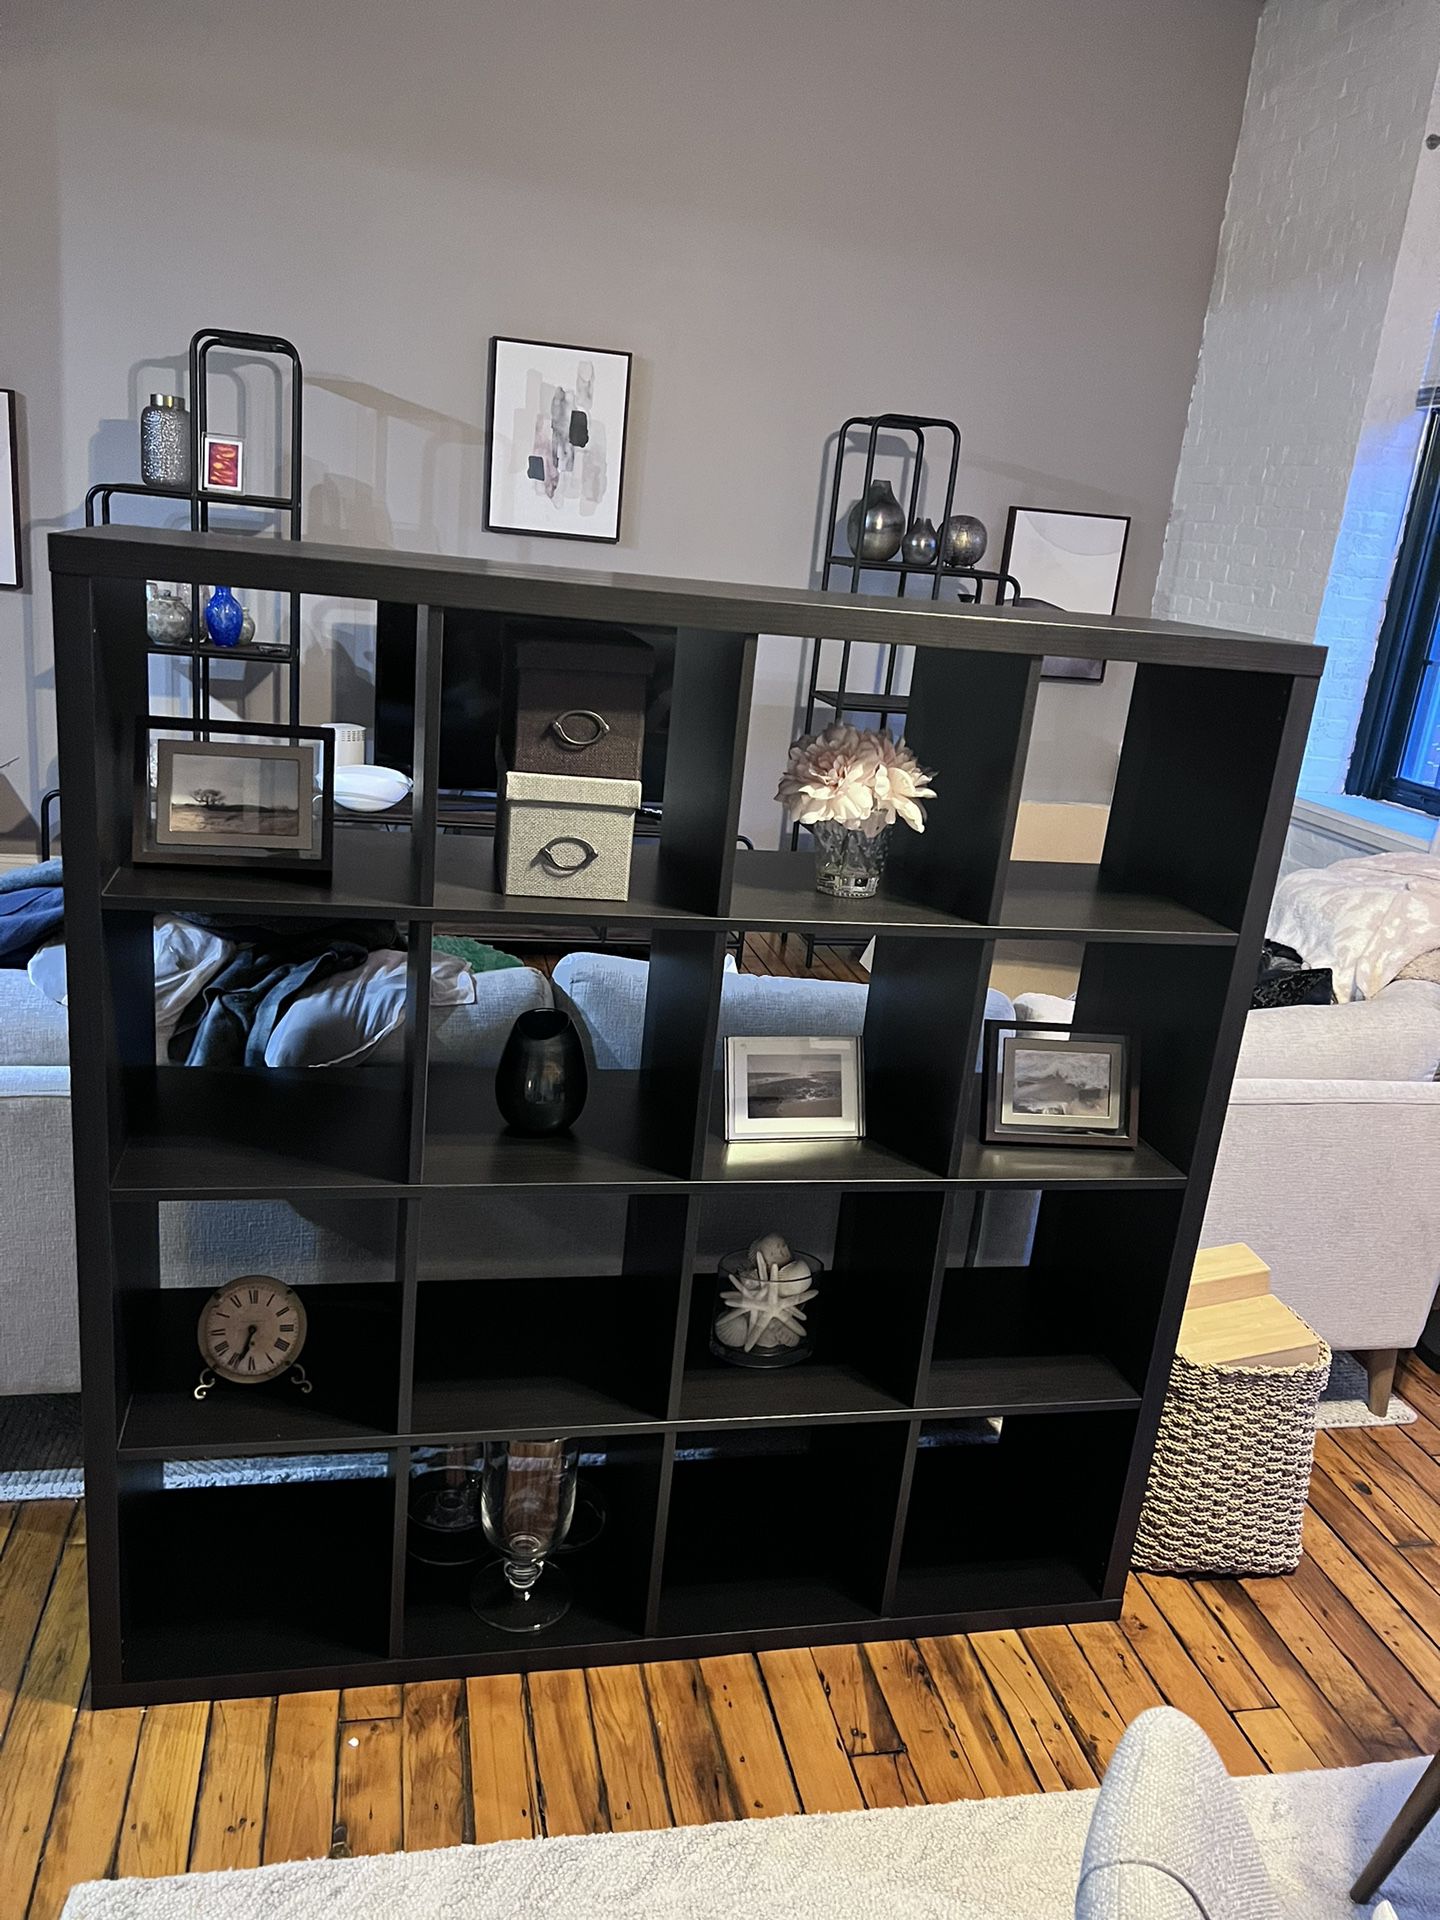 IKEA Shelf Unit/Room Divider